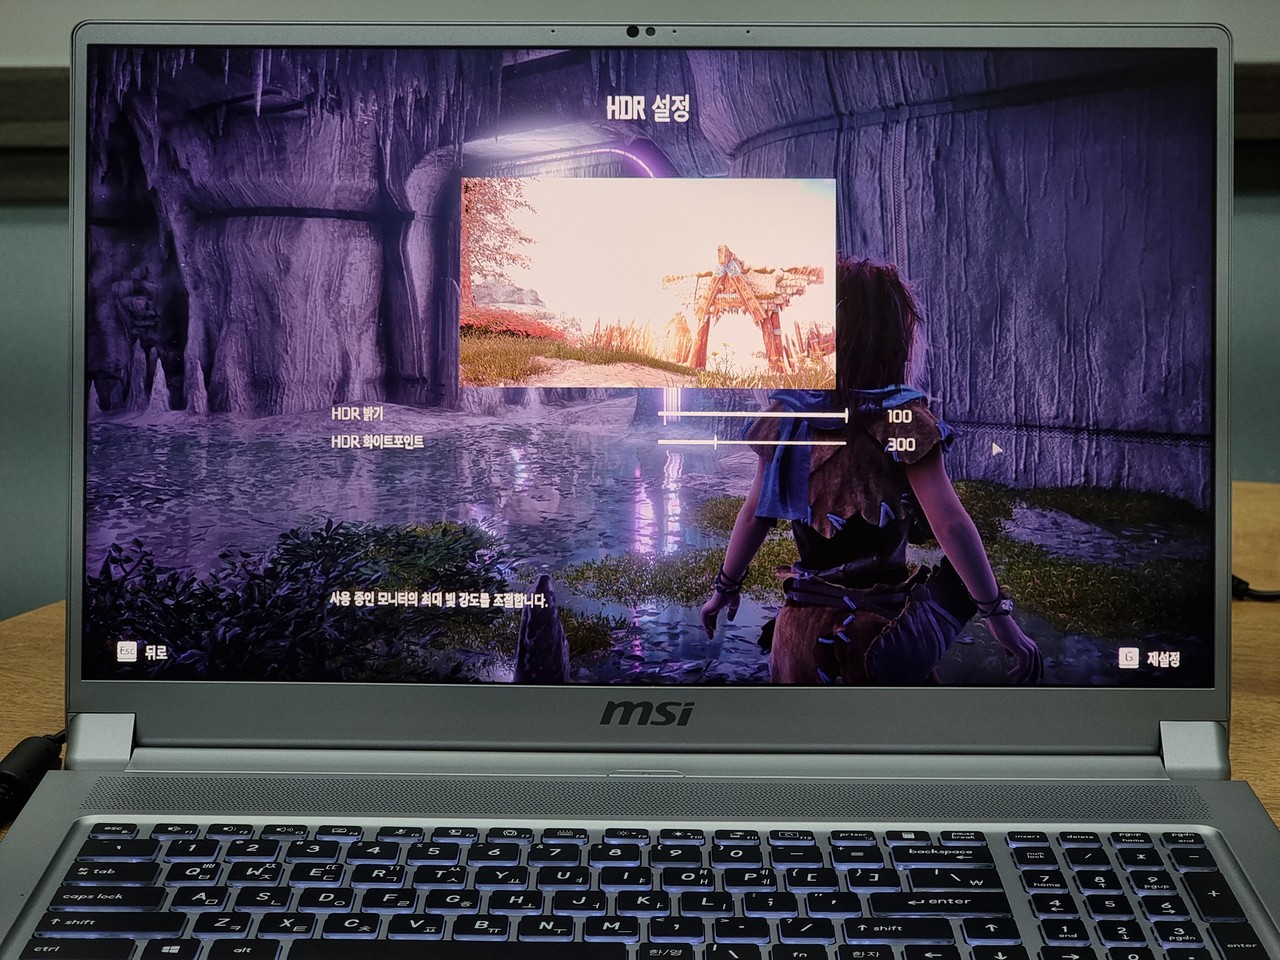 ▲ DisplayHDR1000을 지원하기에 게임에서도 HDR 설정이 가능하다. HDR 밝기를 100으로 설정하면 동굴 내부가 대낮처럼 밝다.